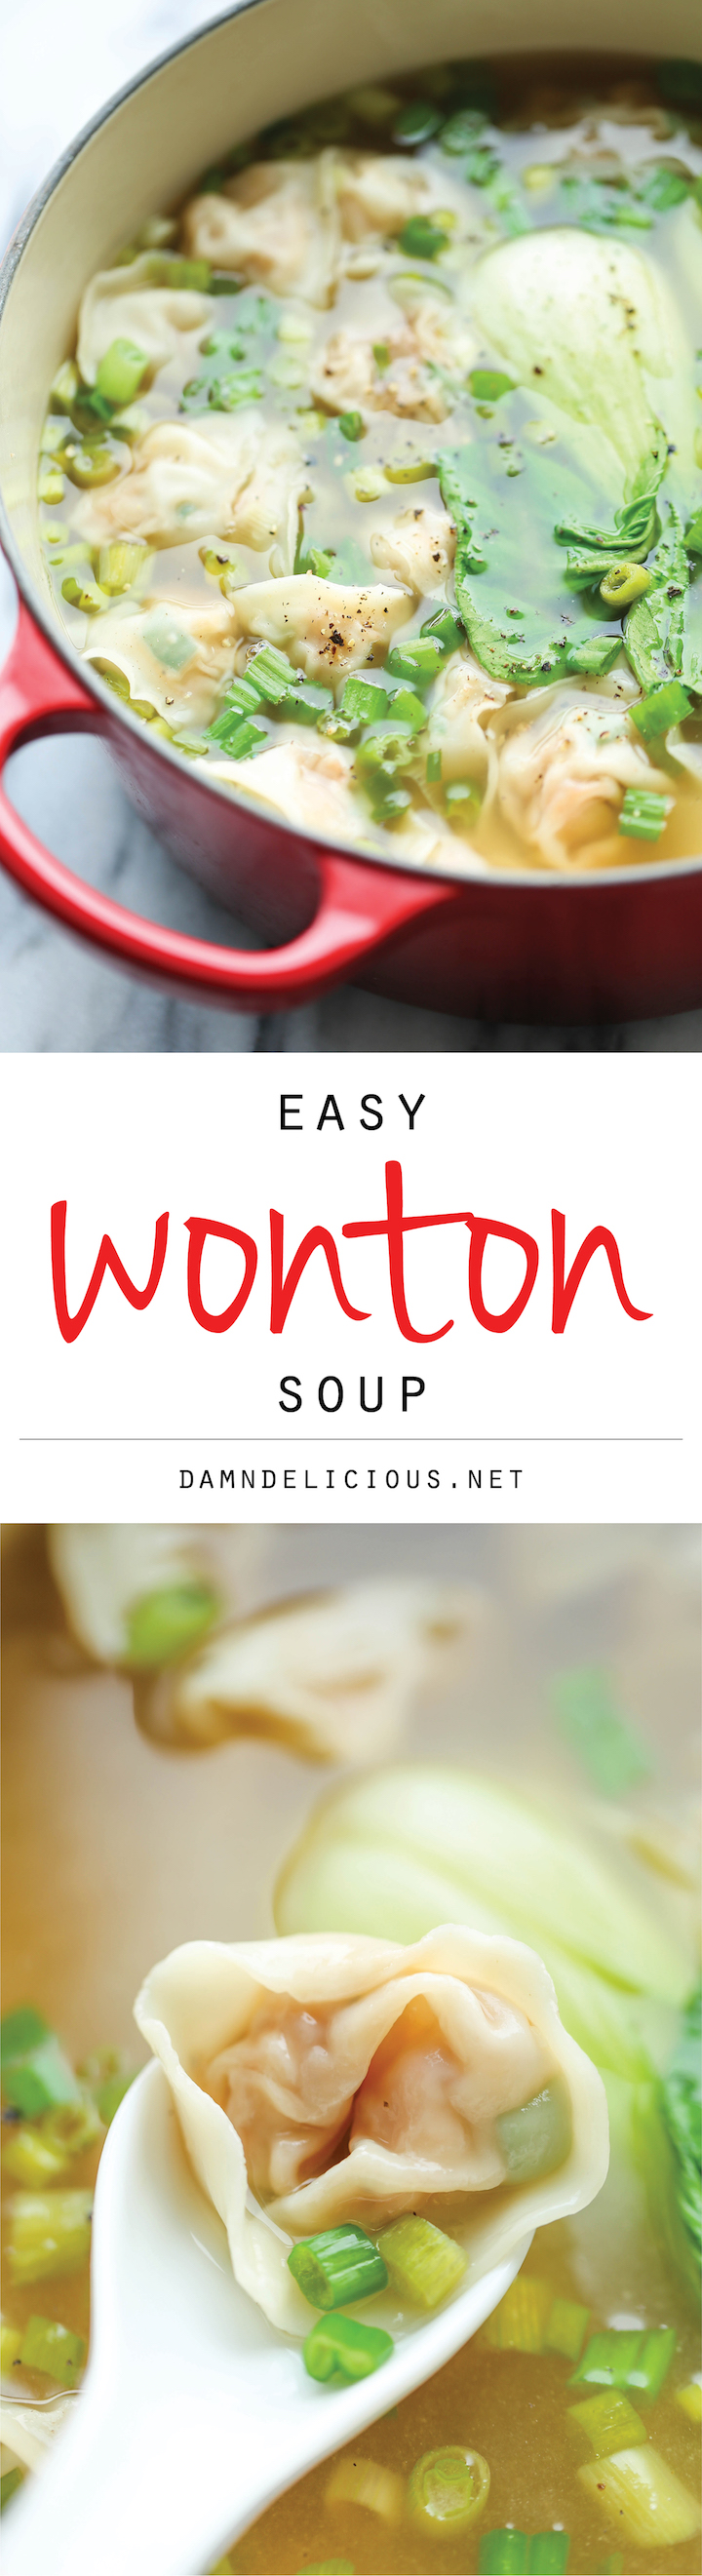 Wonton Soup Recipe